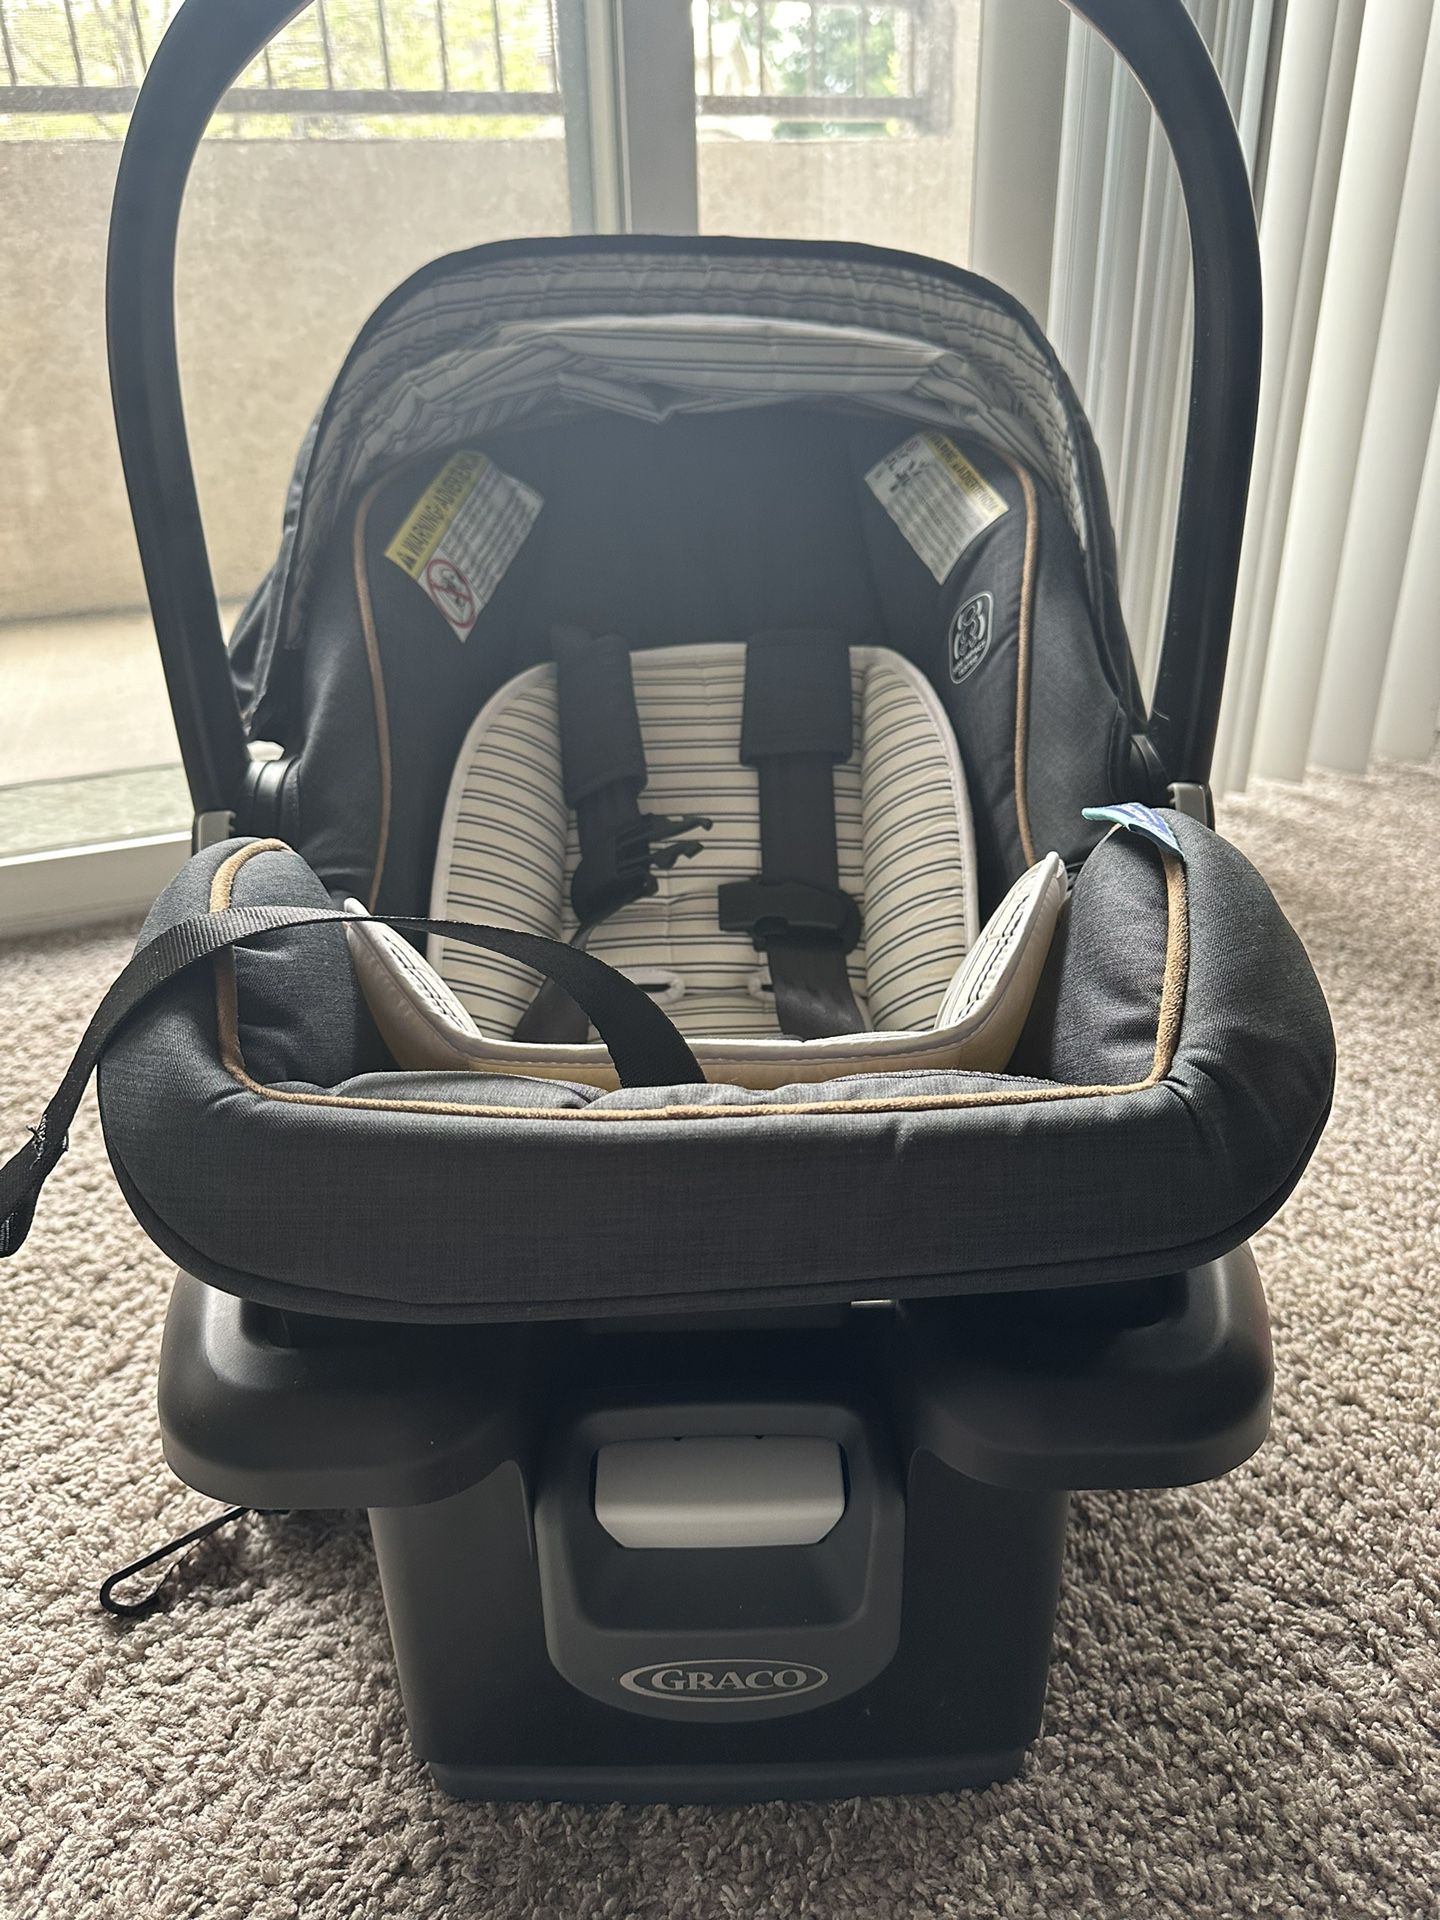 Graco infant Car Seat 